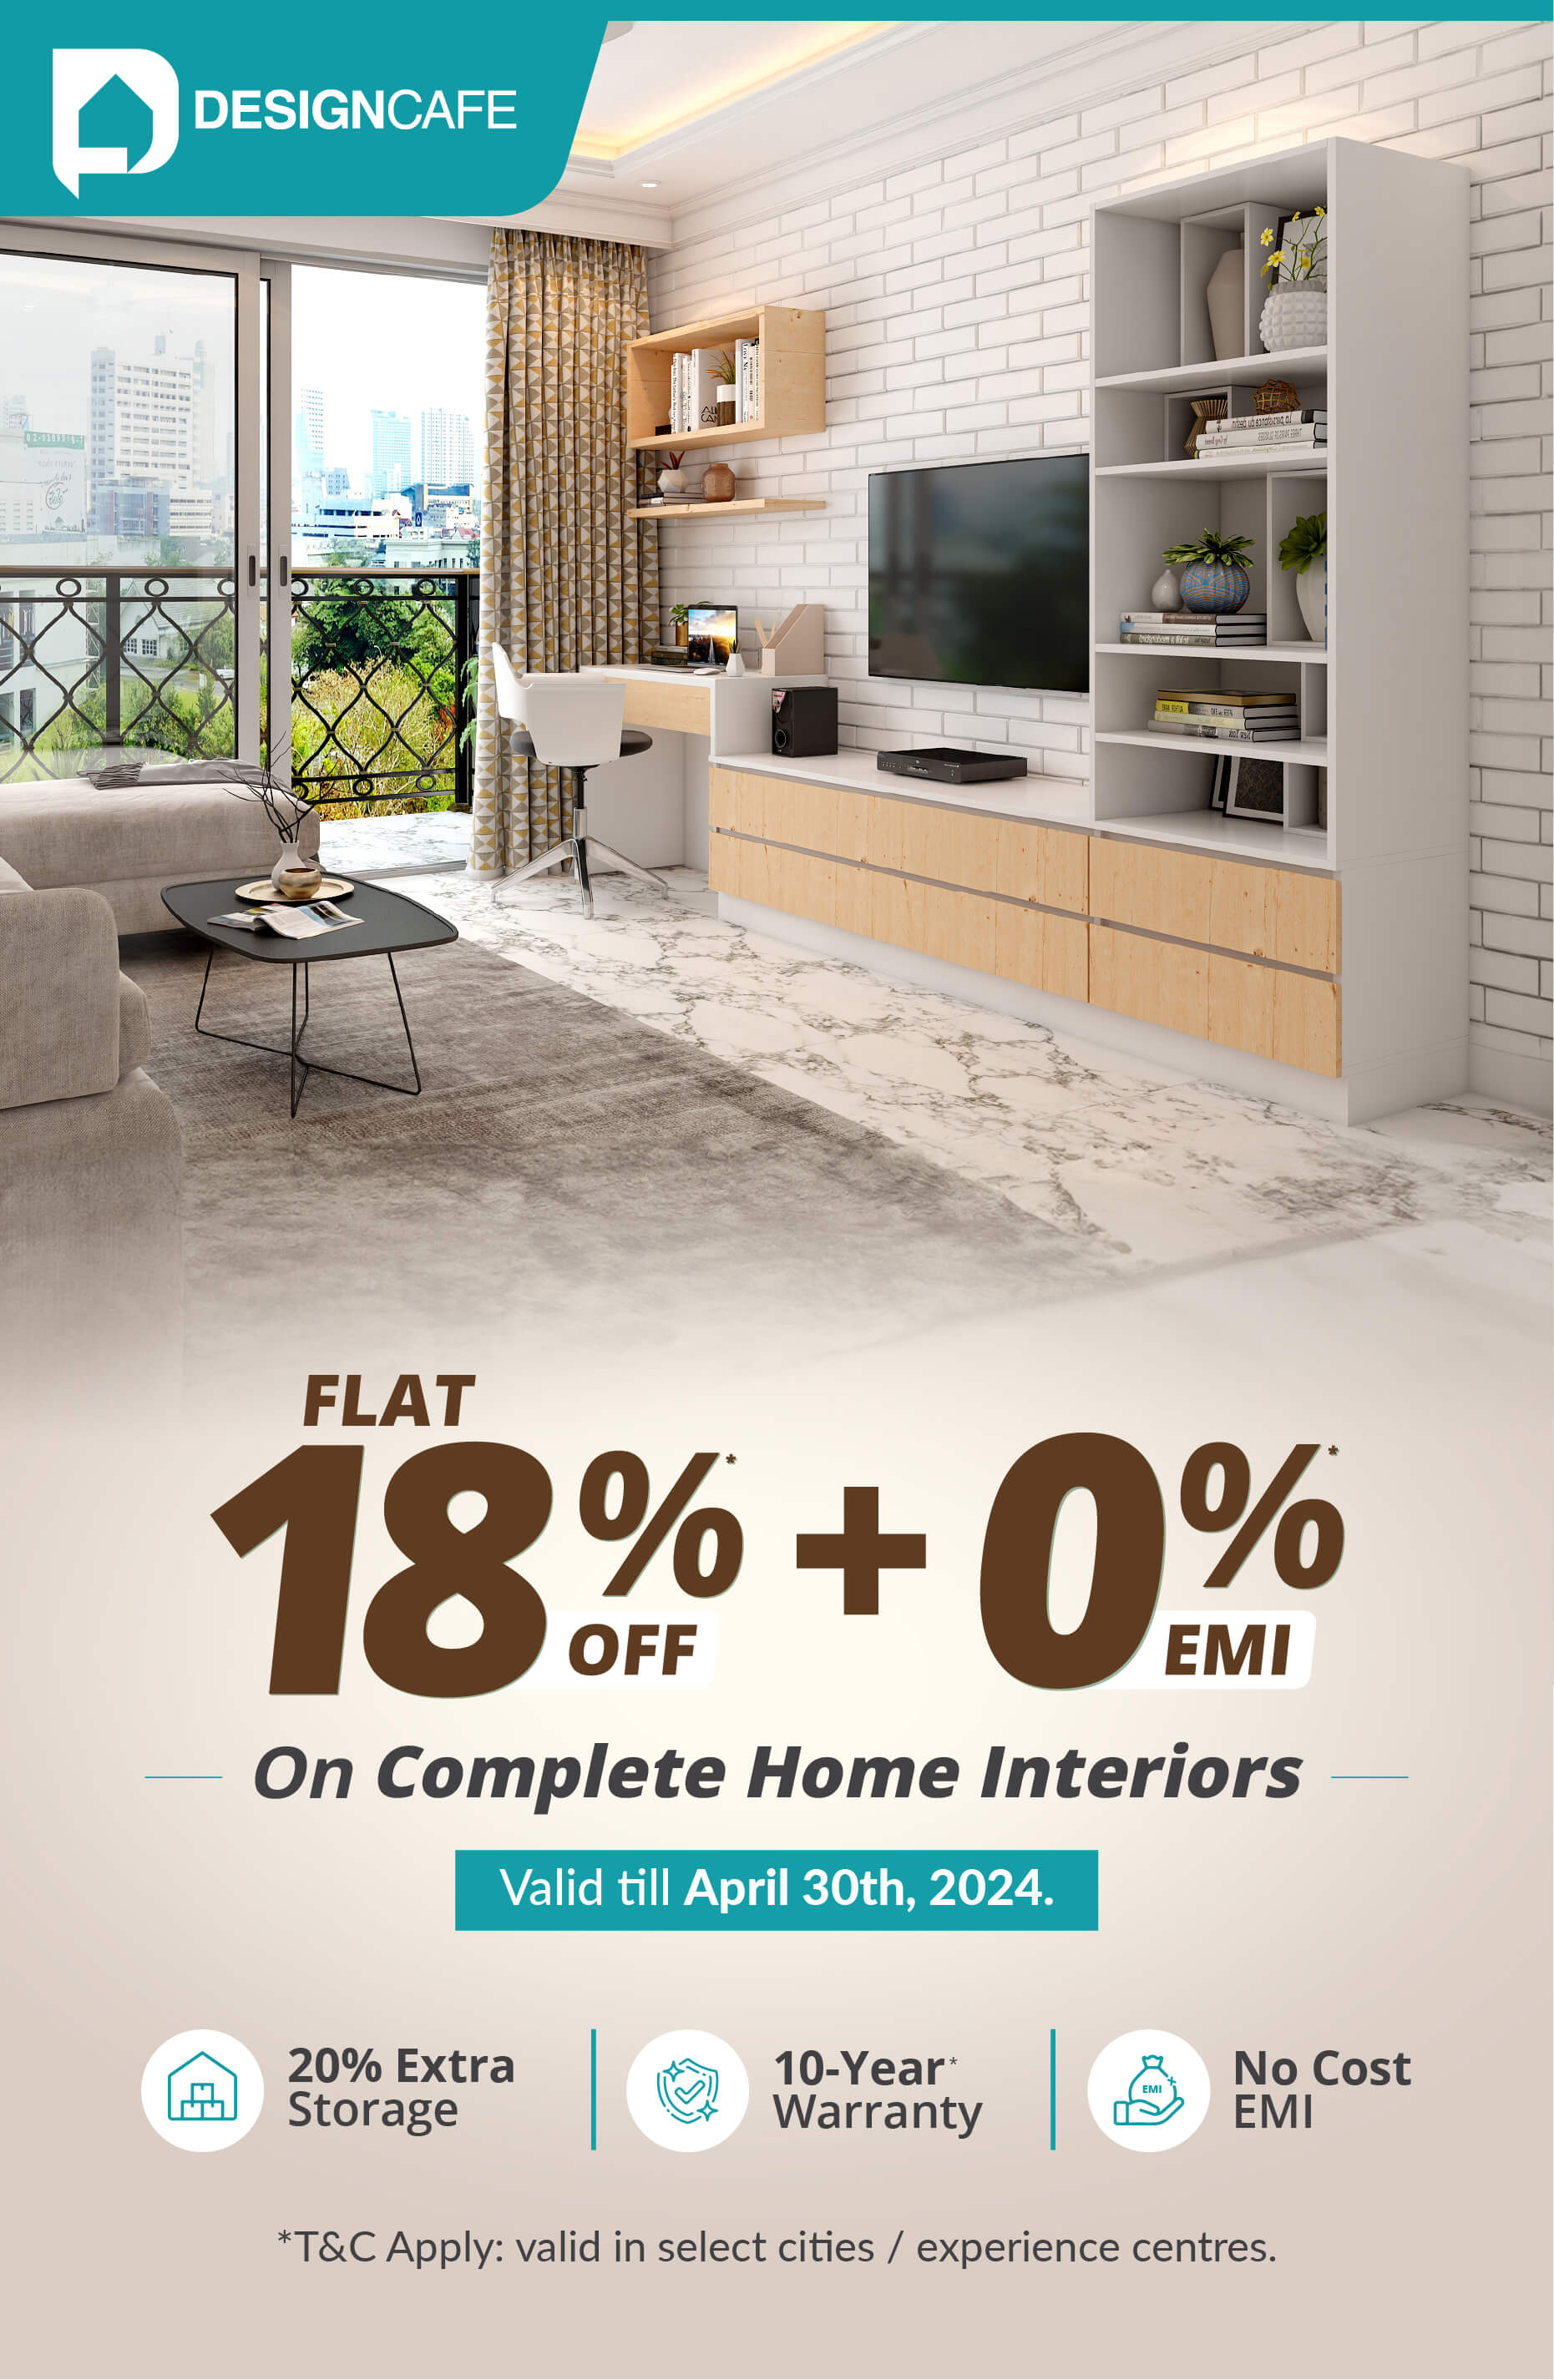 Home interior design offer from DesignCafe